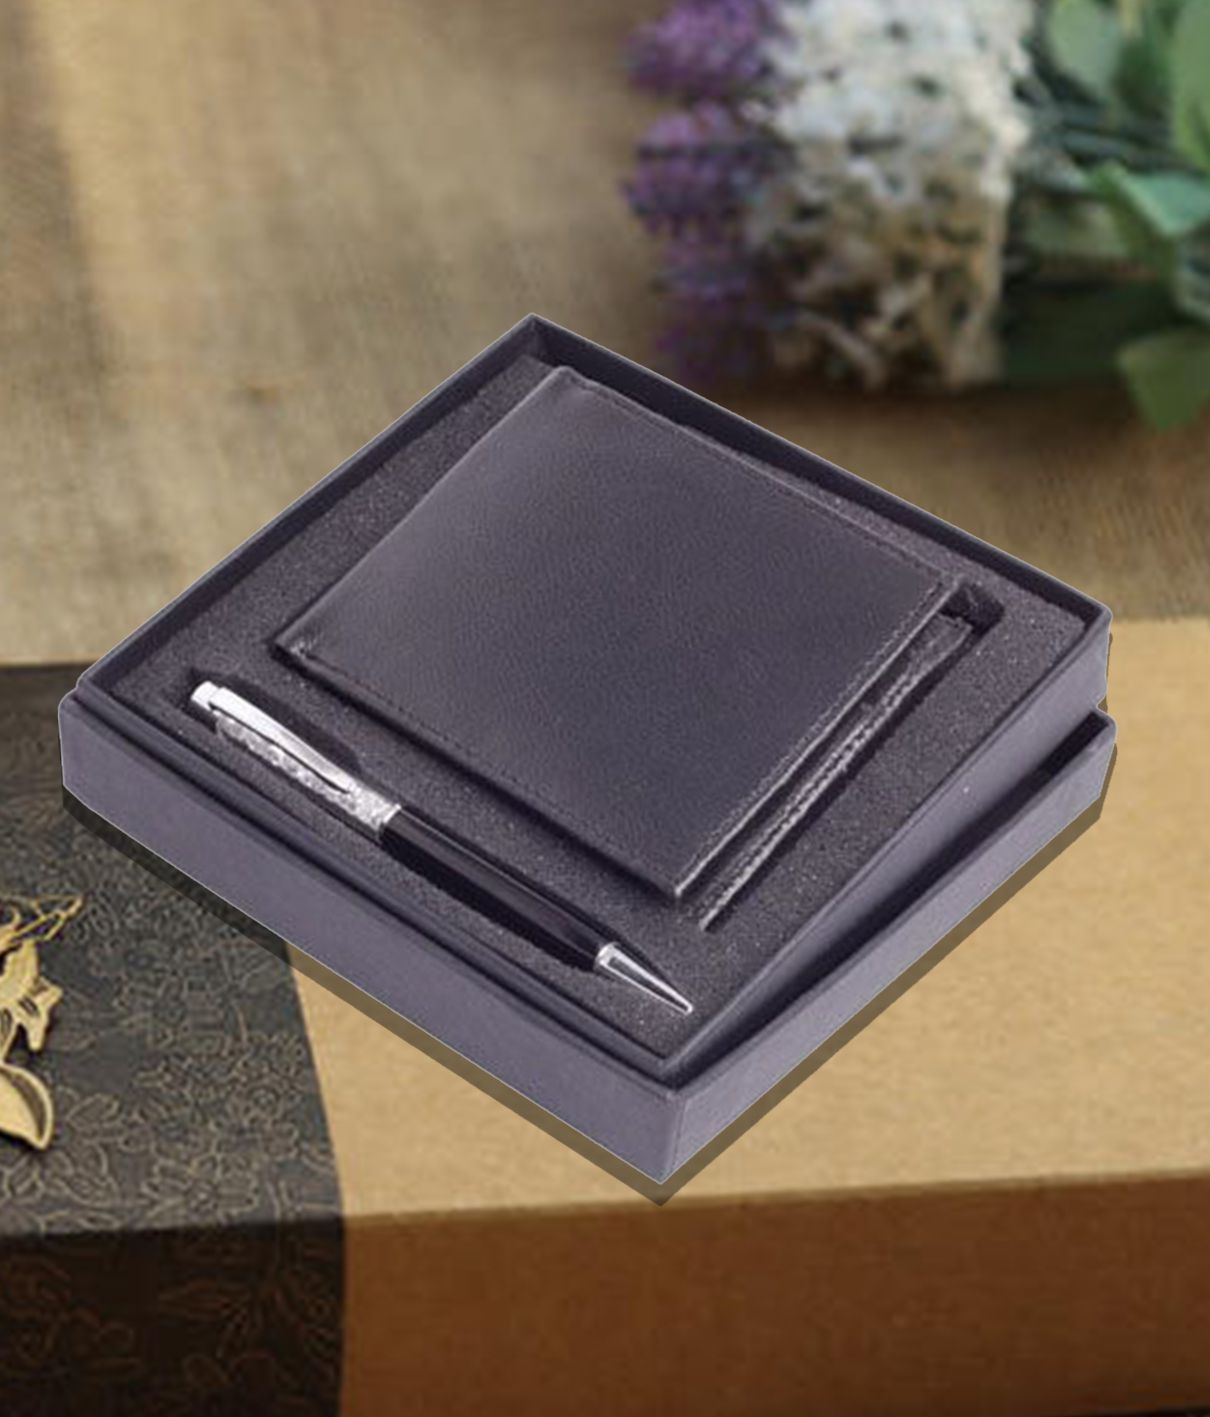 Keepsake Combo Of Black Crystal Pen With Black Wallet: Buy Online at ...